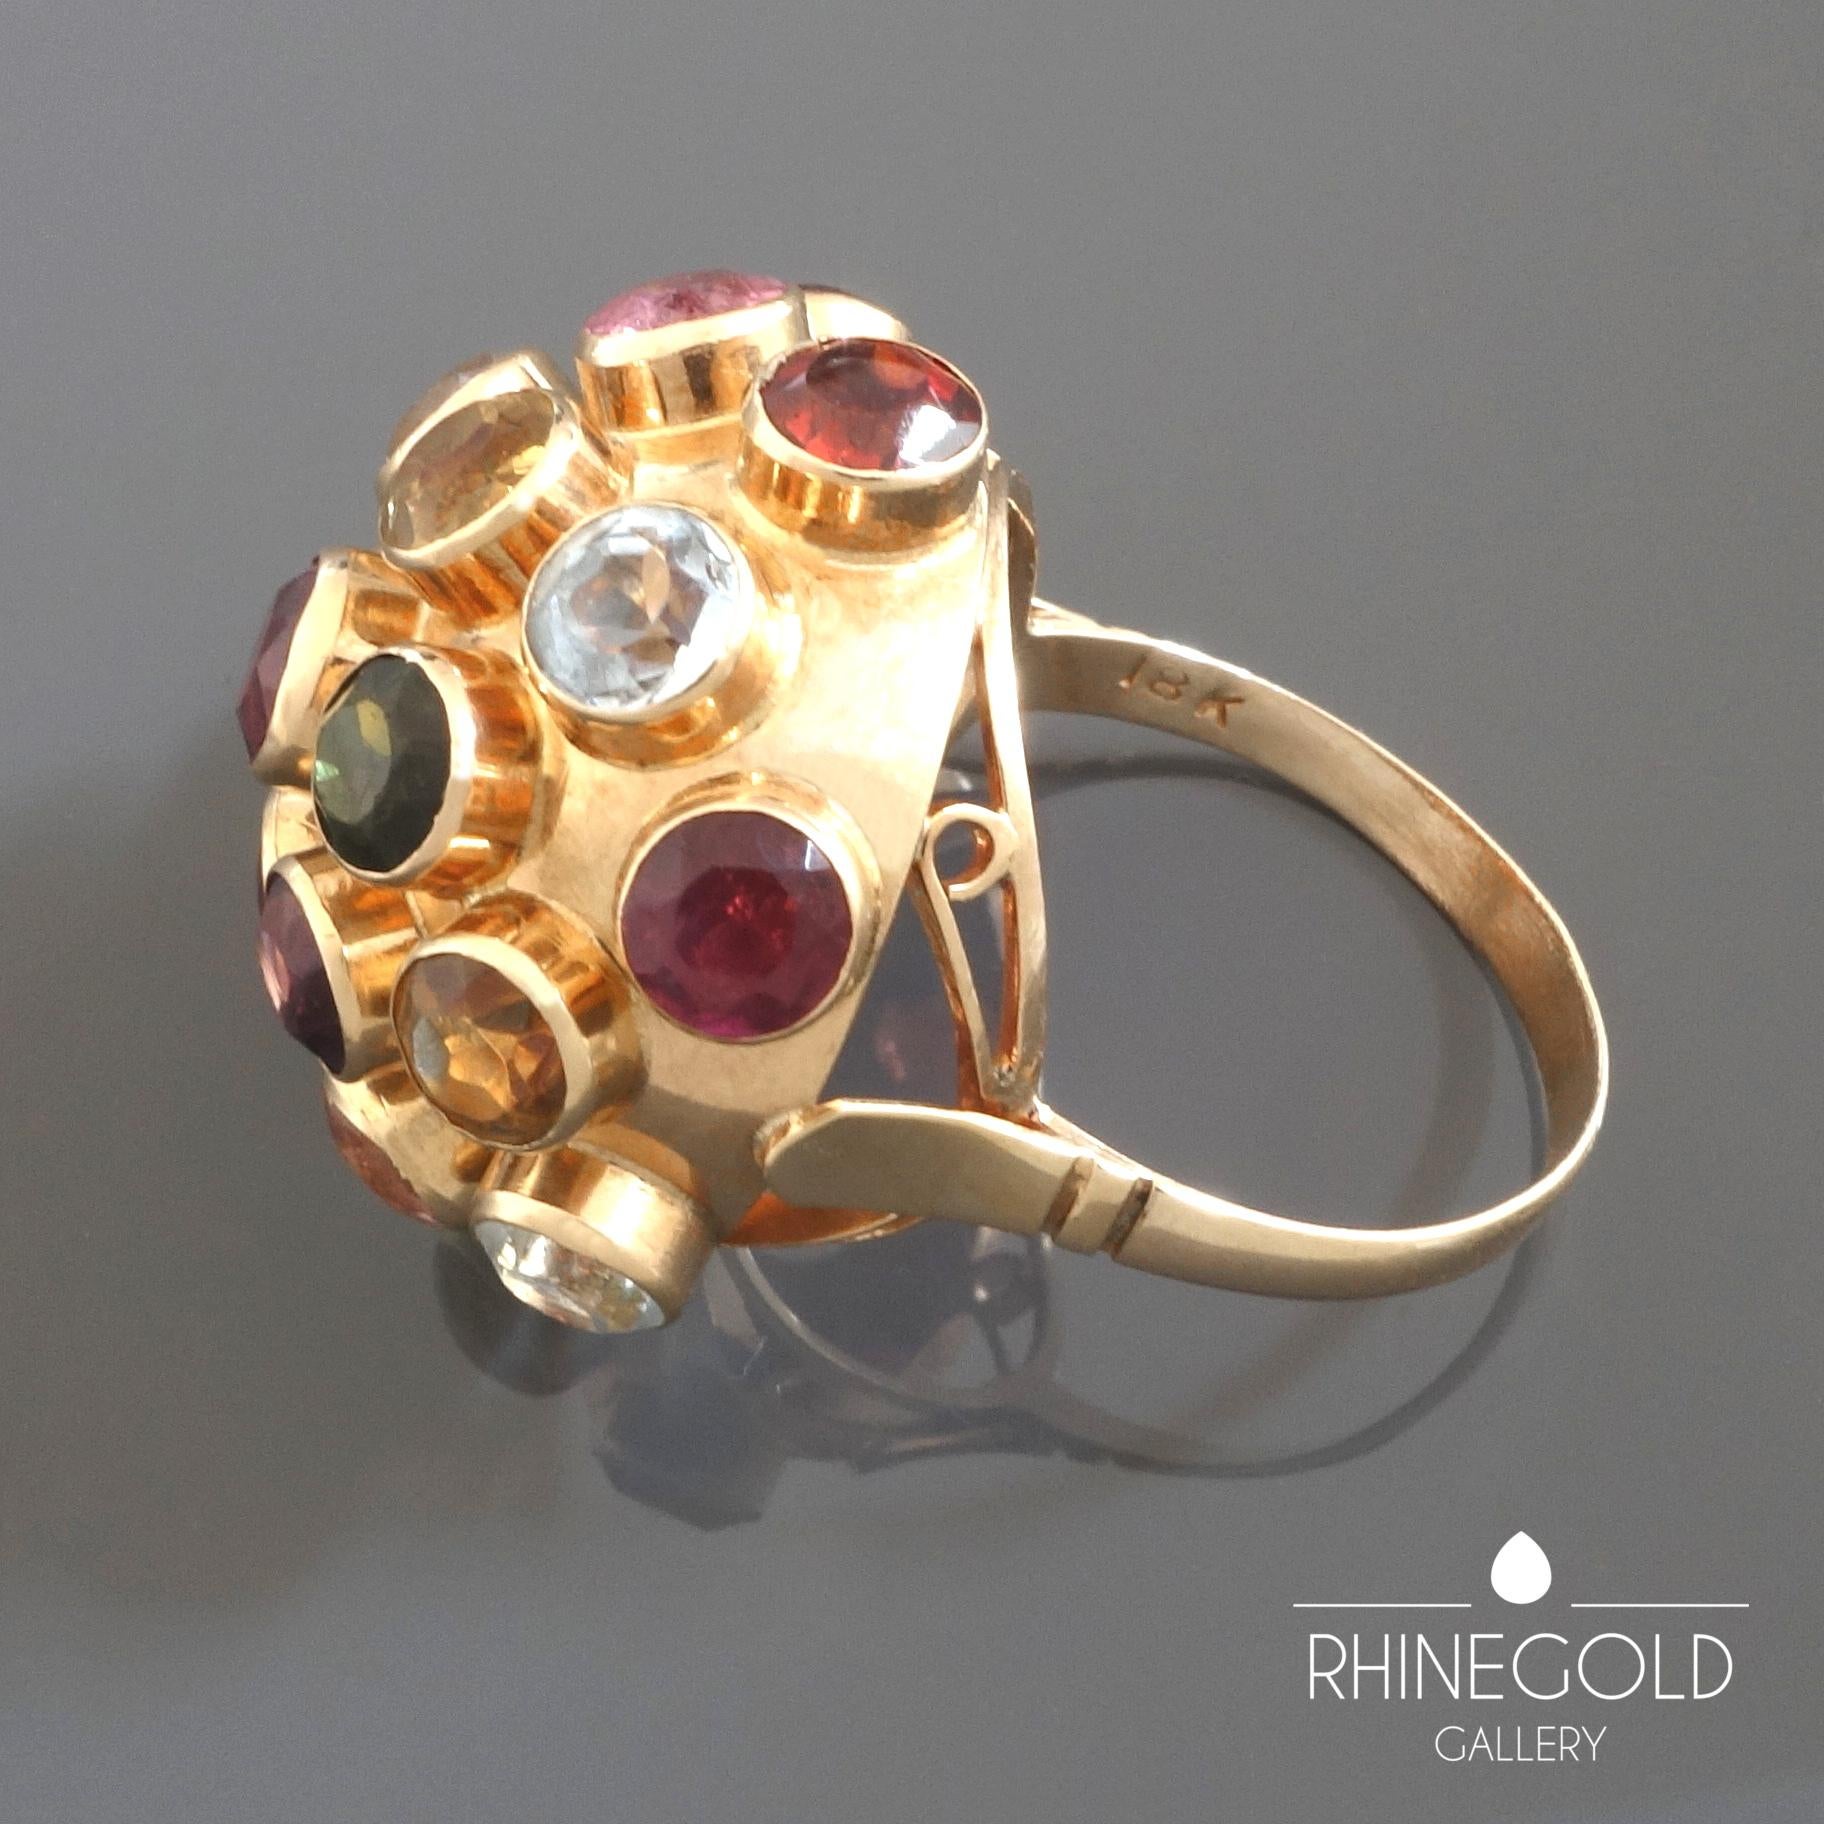 1960s Midcentury Modernist Multi Stone Gold Sputnik Ring
18k rose gold, various precious stones (amethyst, citrine, tourmaline, garnet, aquamarine, etc.)
Ring head: Ø 2.4 cm (approx. 15/16”)
Ring size: Ø 17.5 mm = EU 55.1 / US 7 1/4 / ASIA